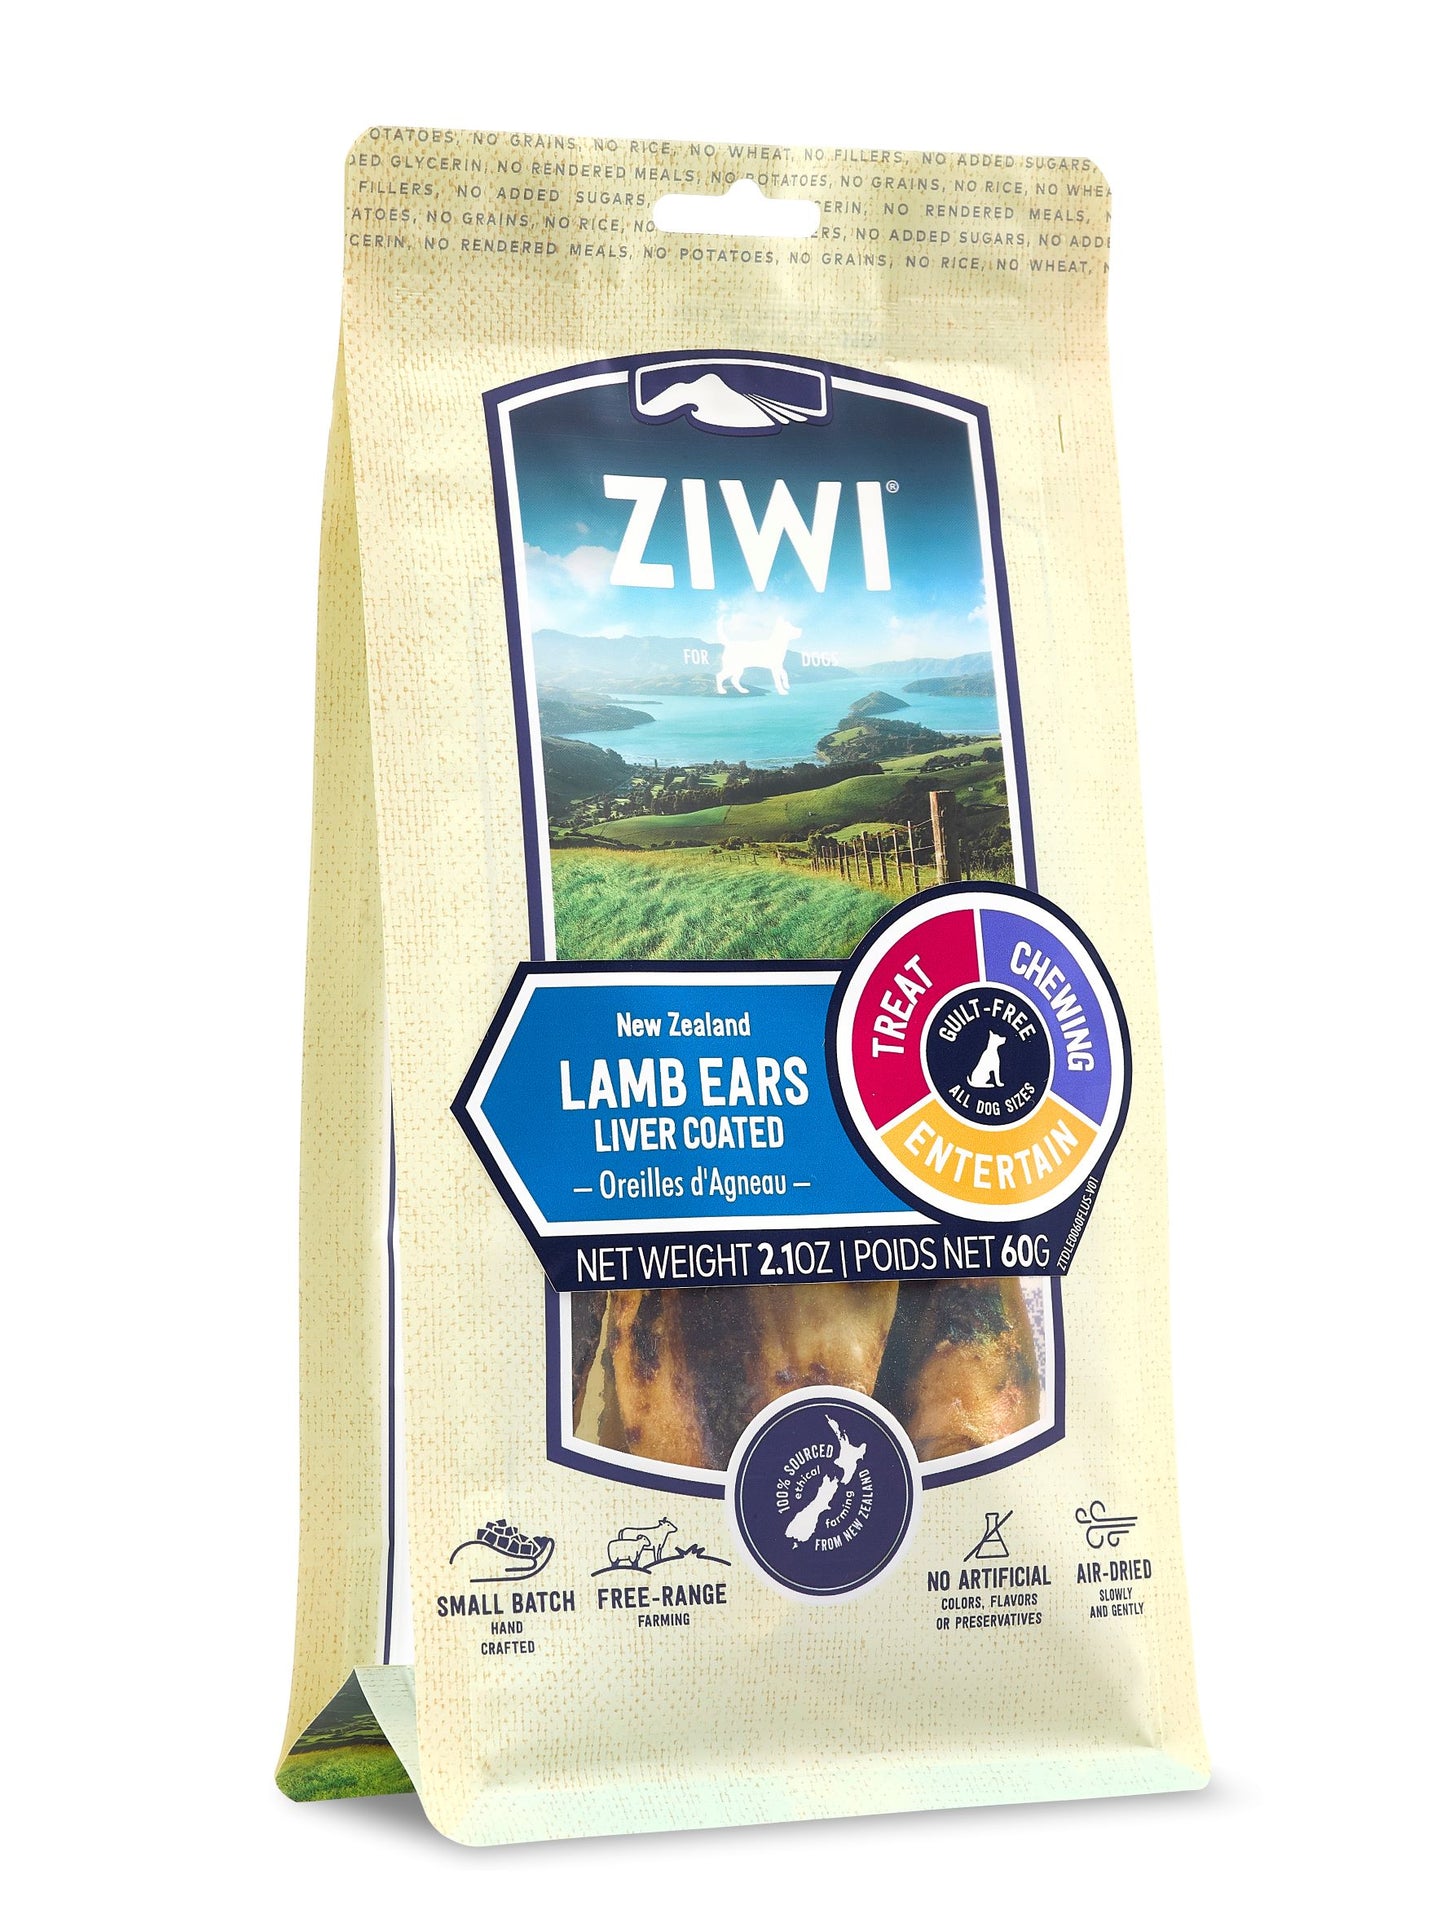 ZIWI Lamb Ears - Liver Coated, 2.1-oz Bag